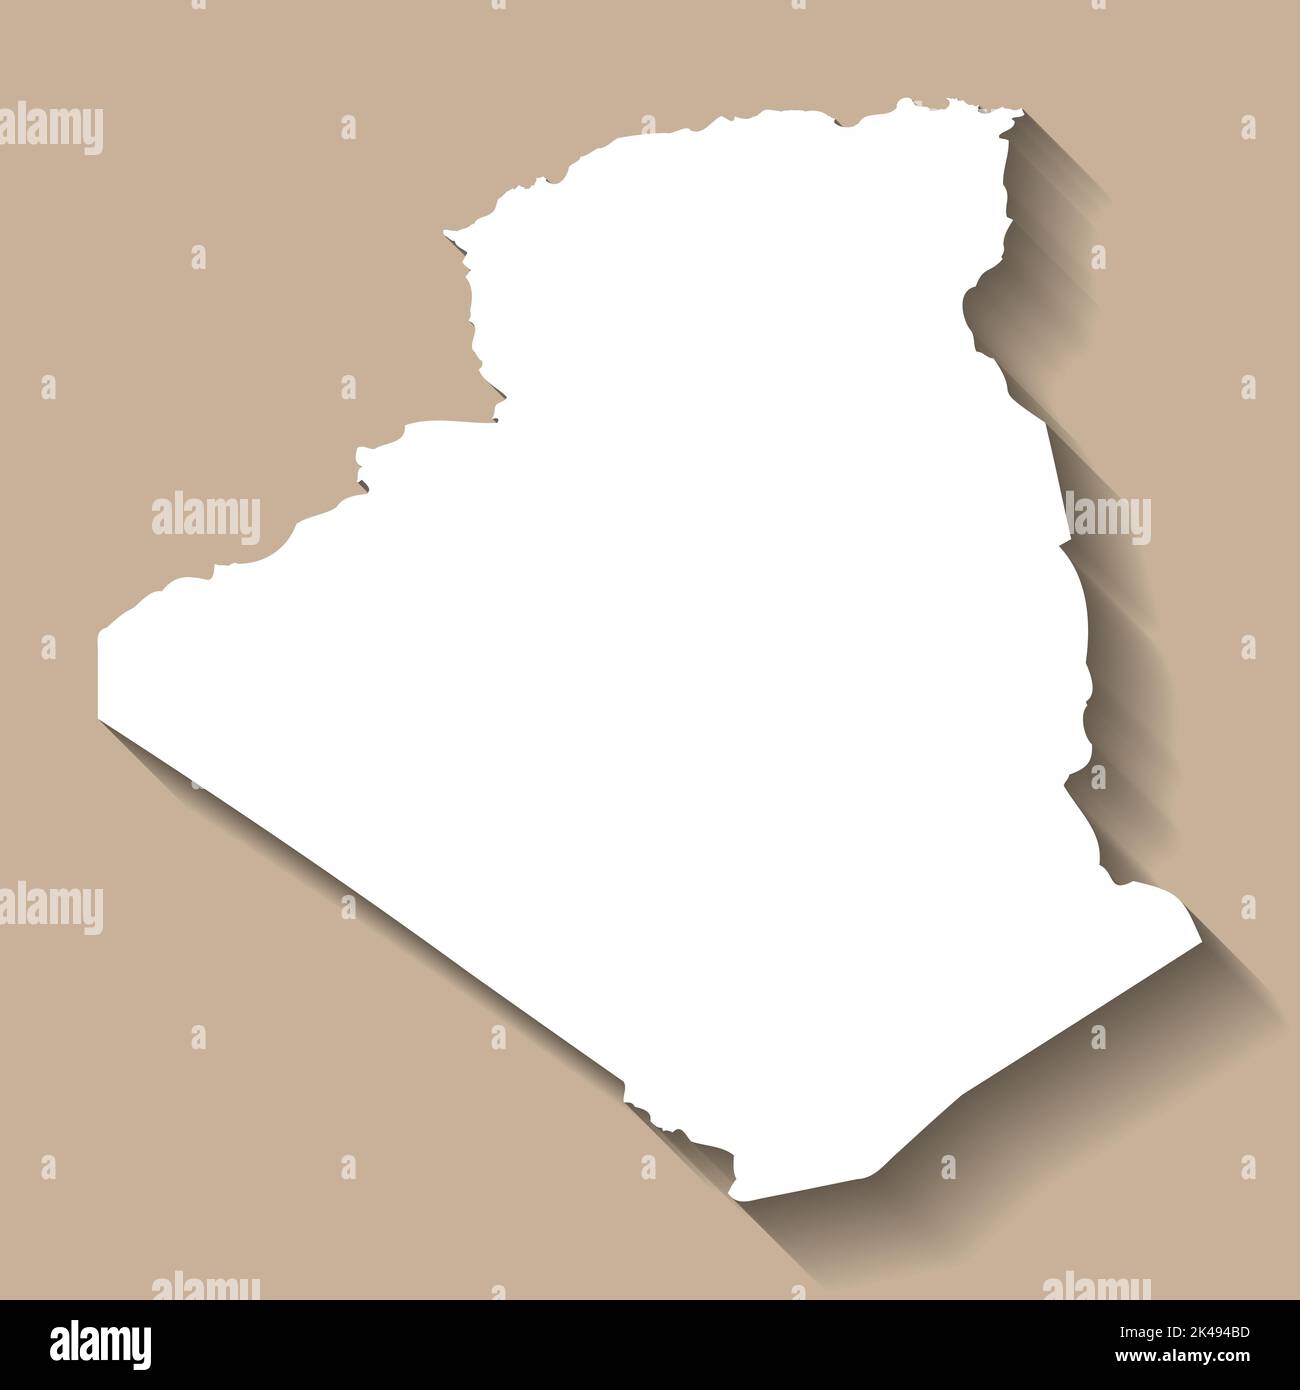 Algeria vector country map silhouette Stock Vector